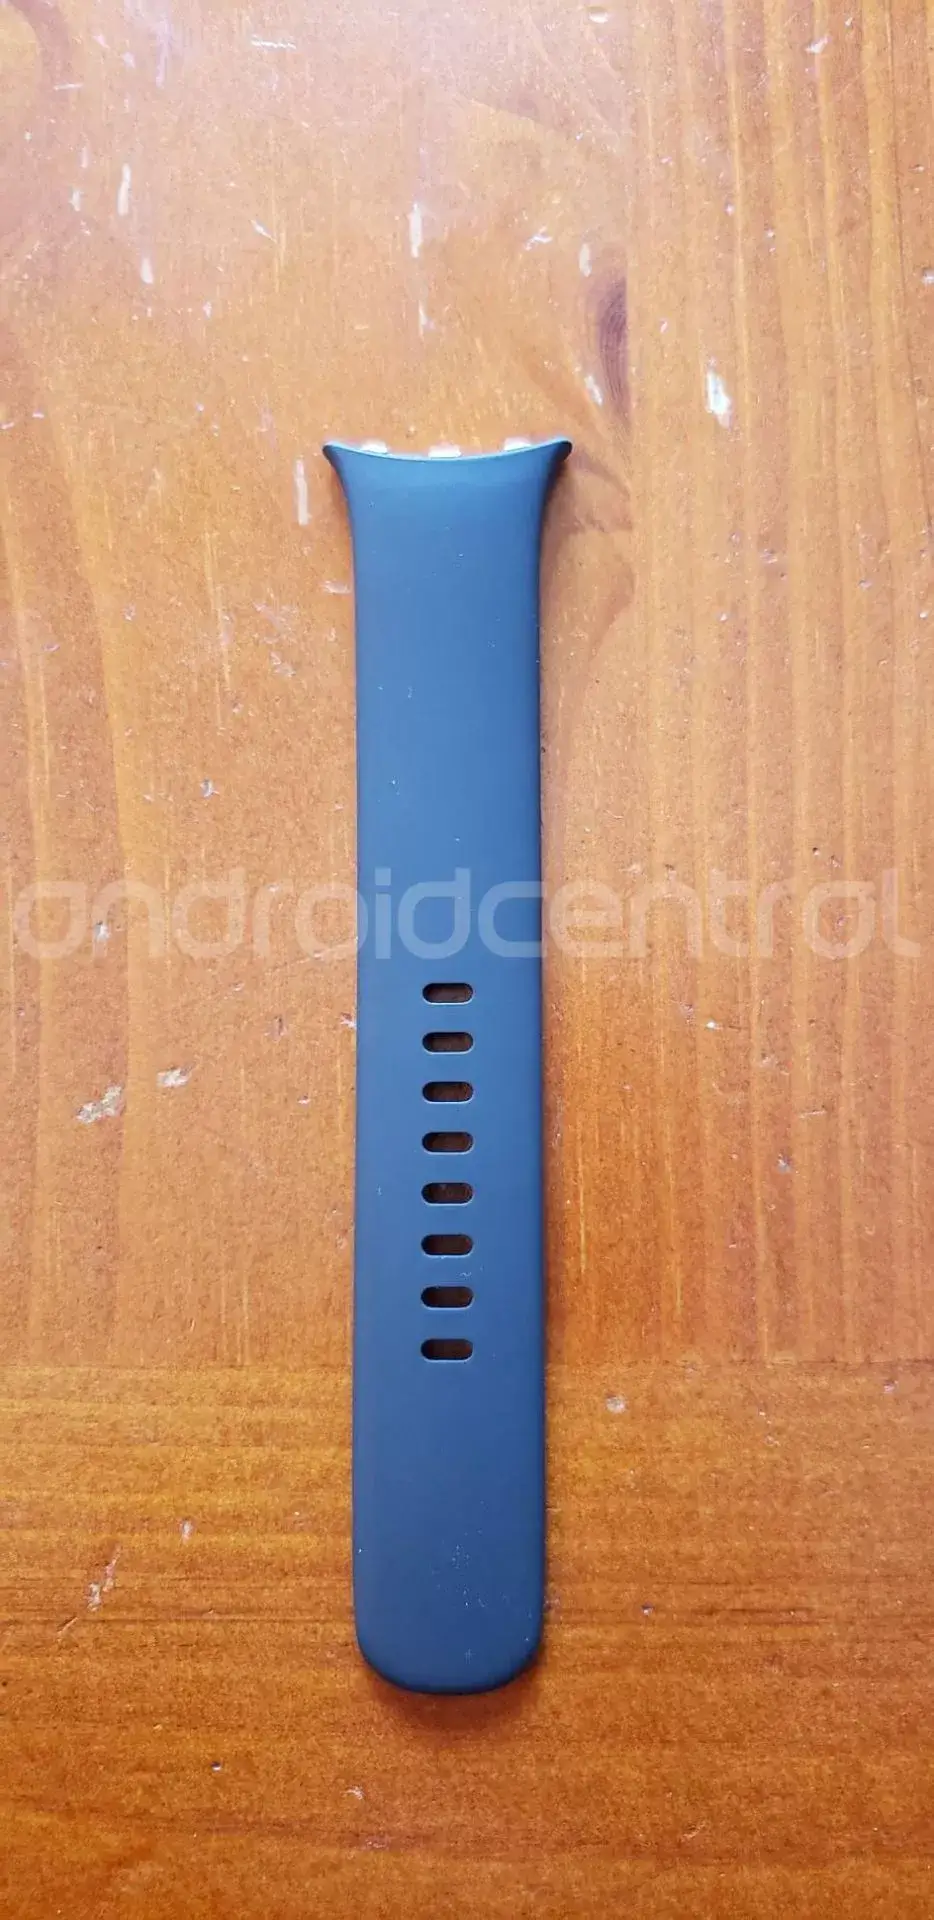 Google Pixel Watch Prototype Band